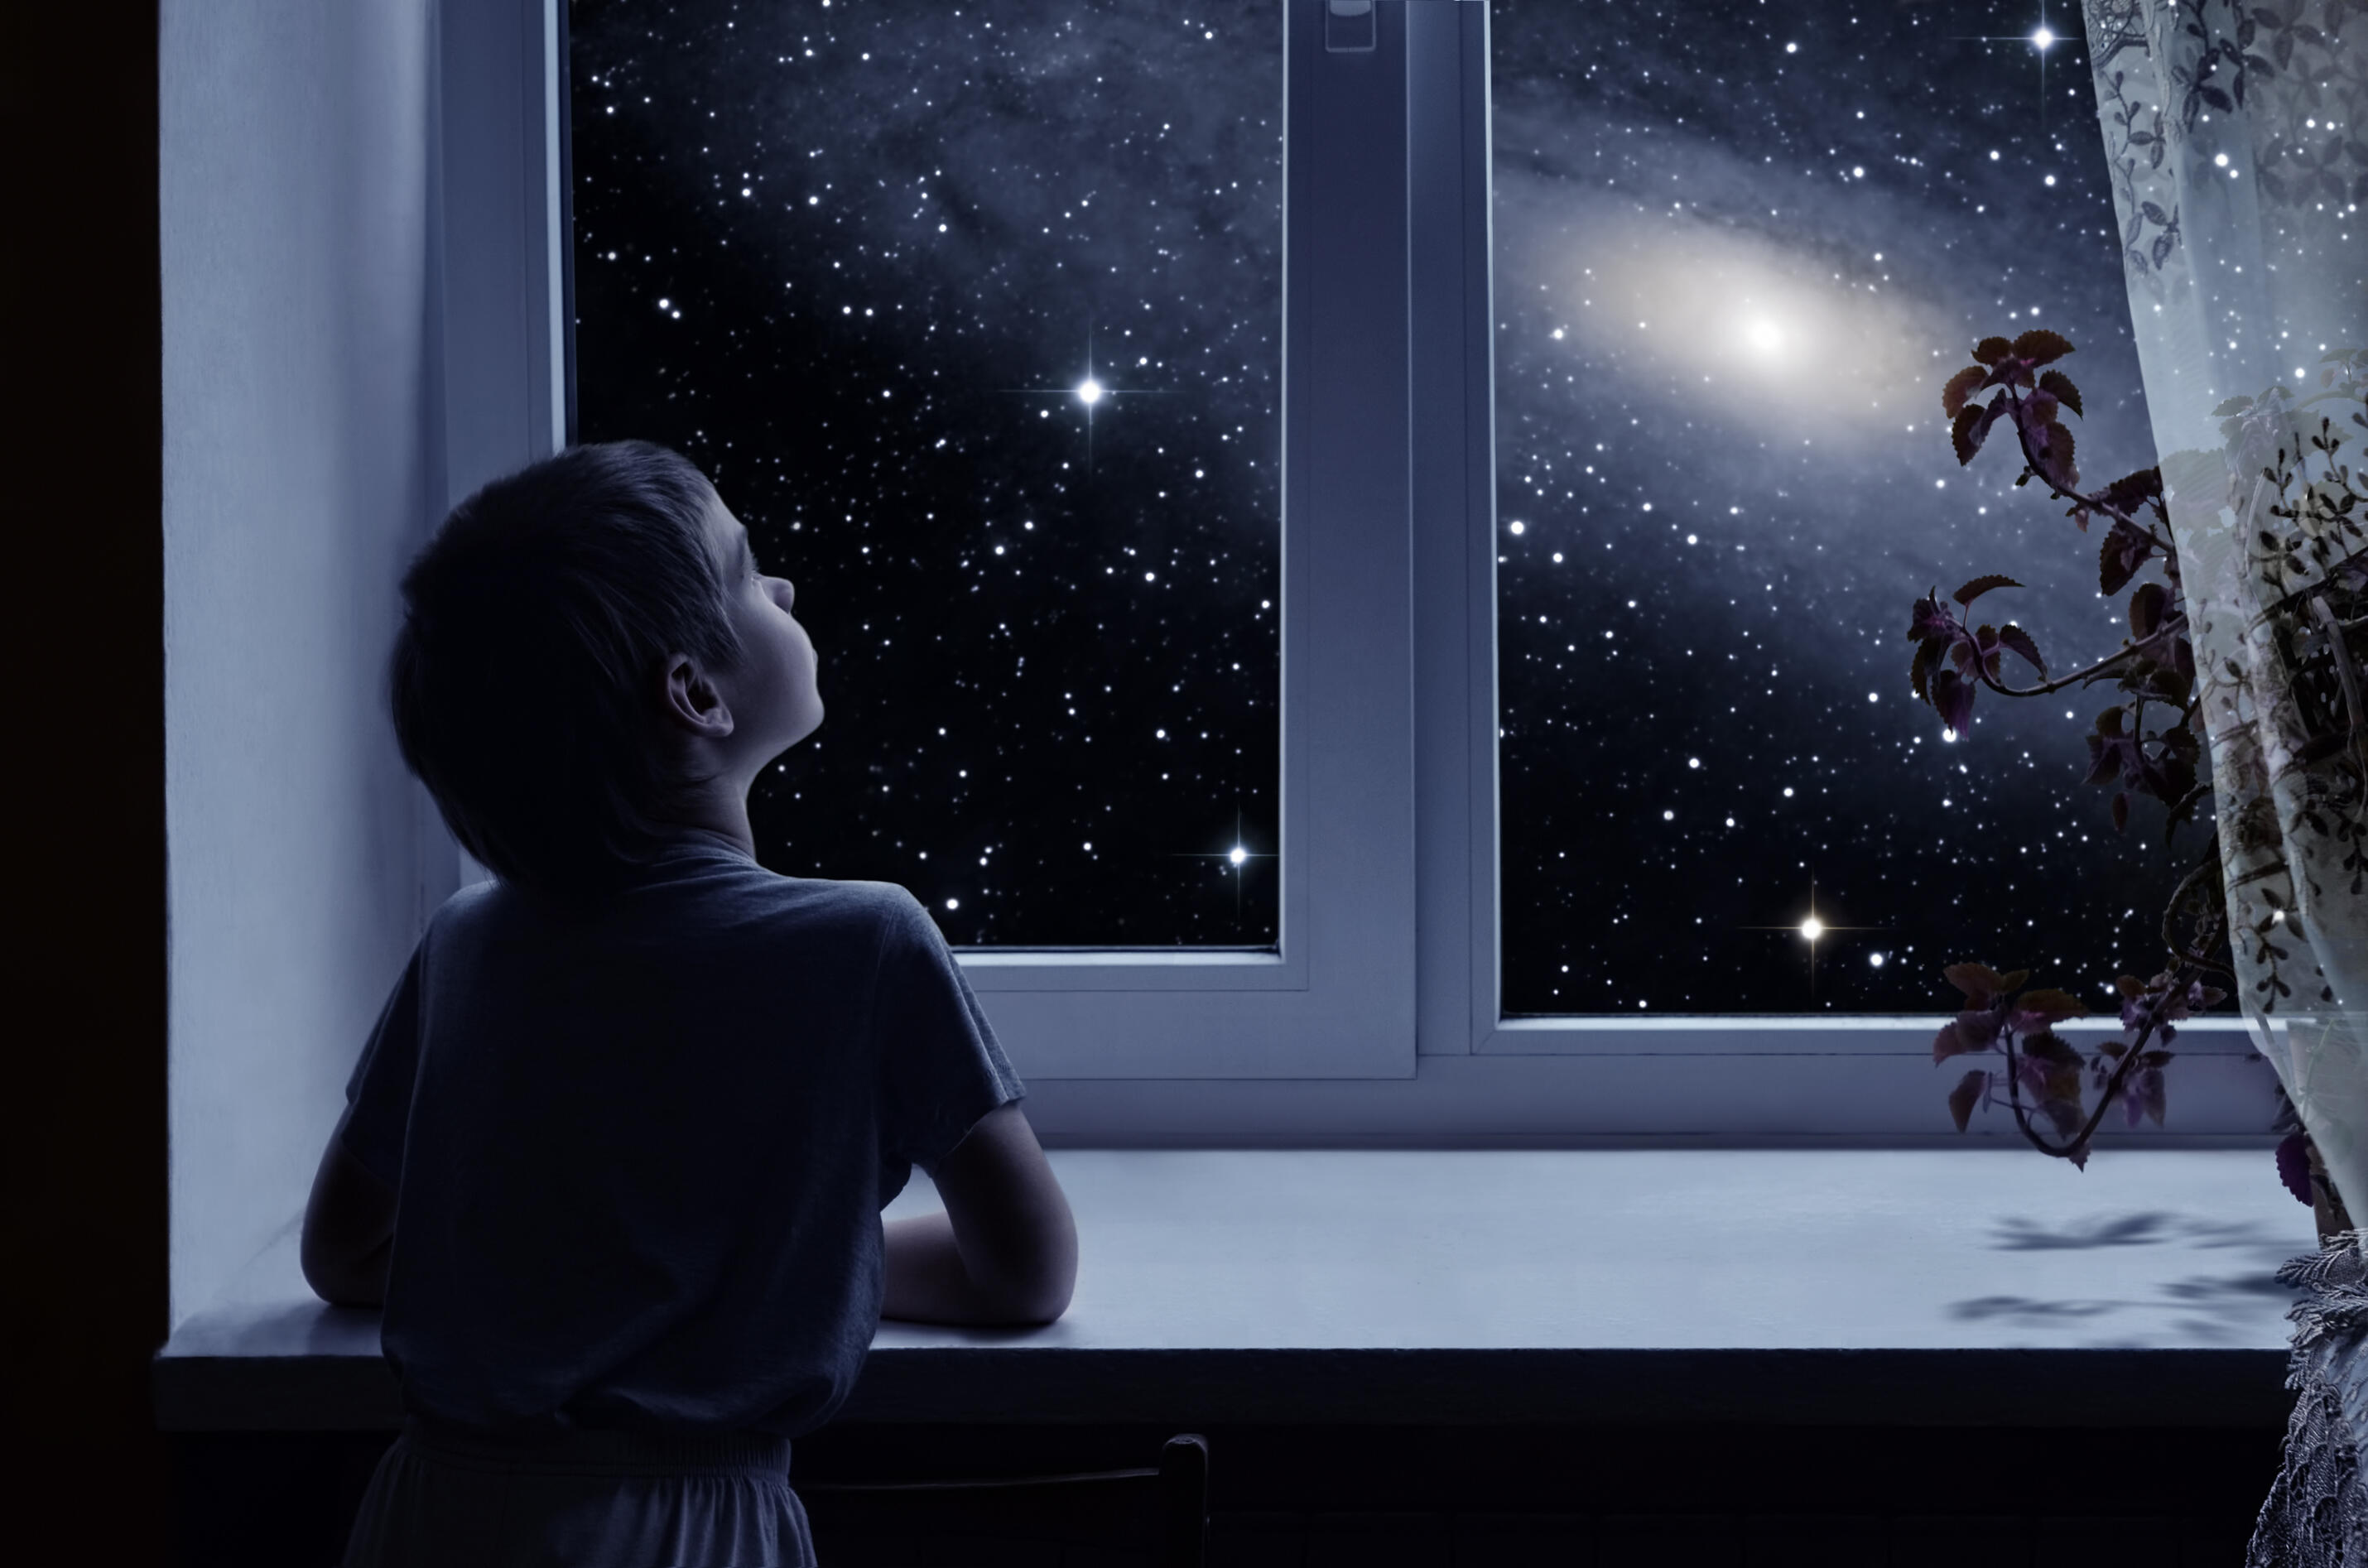 Looking at the moon. Окно ночью. Мальчик у окна. Звезды на окна. Звездное небо в окне.